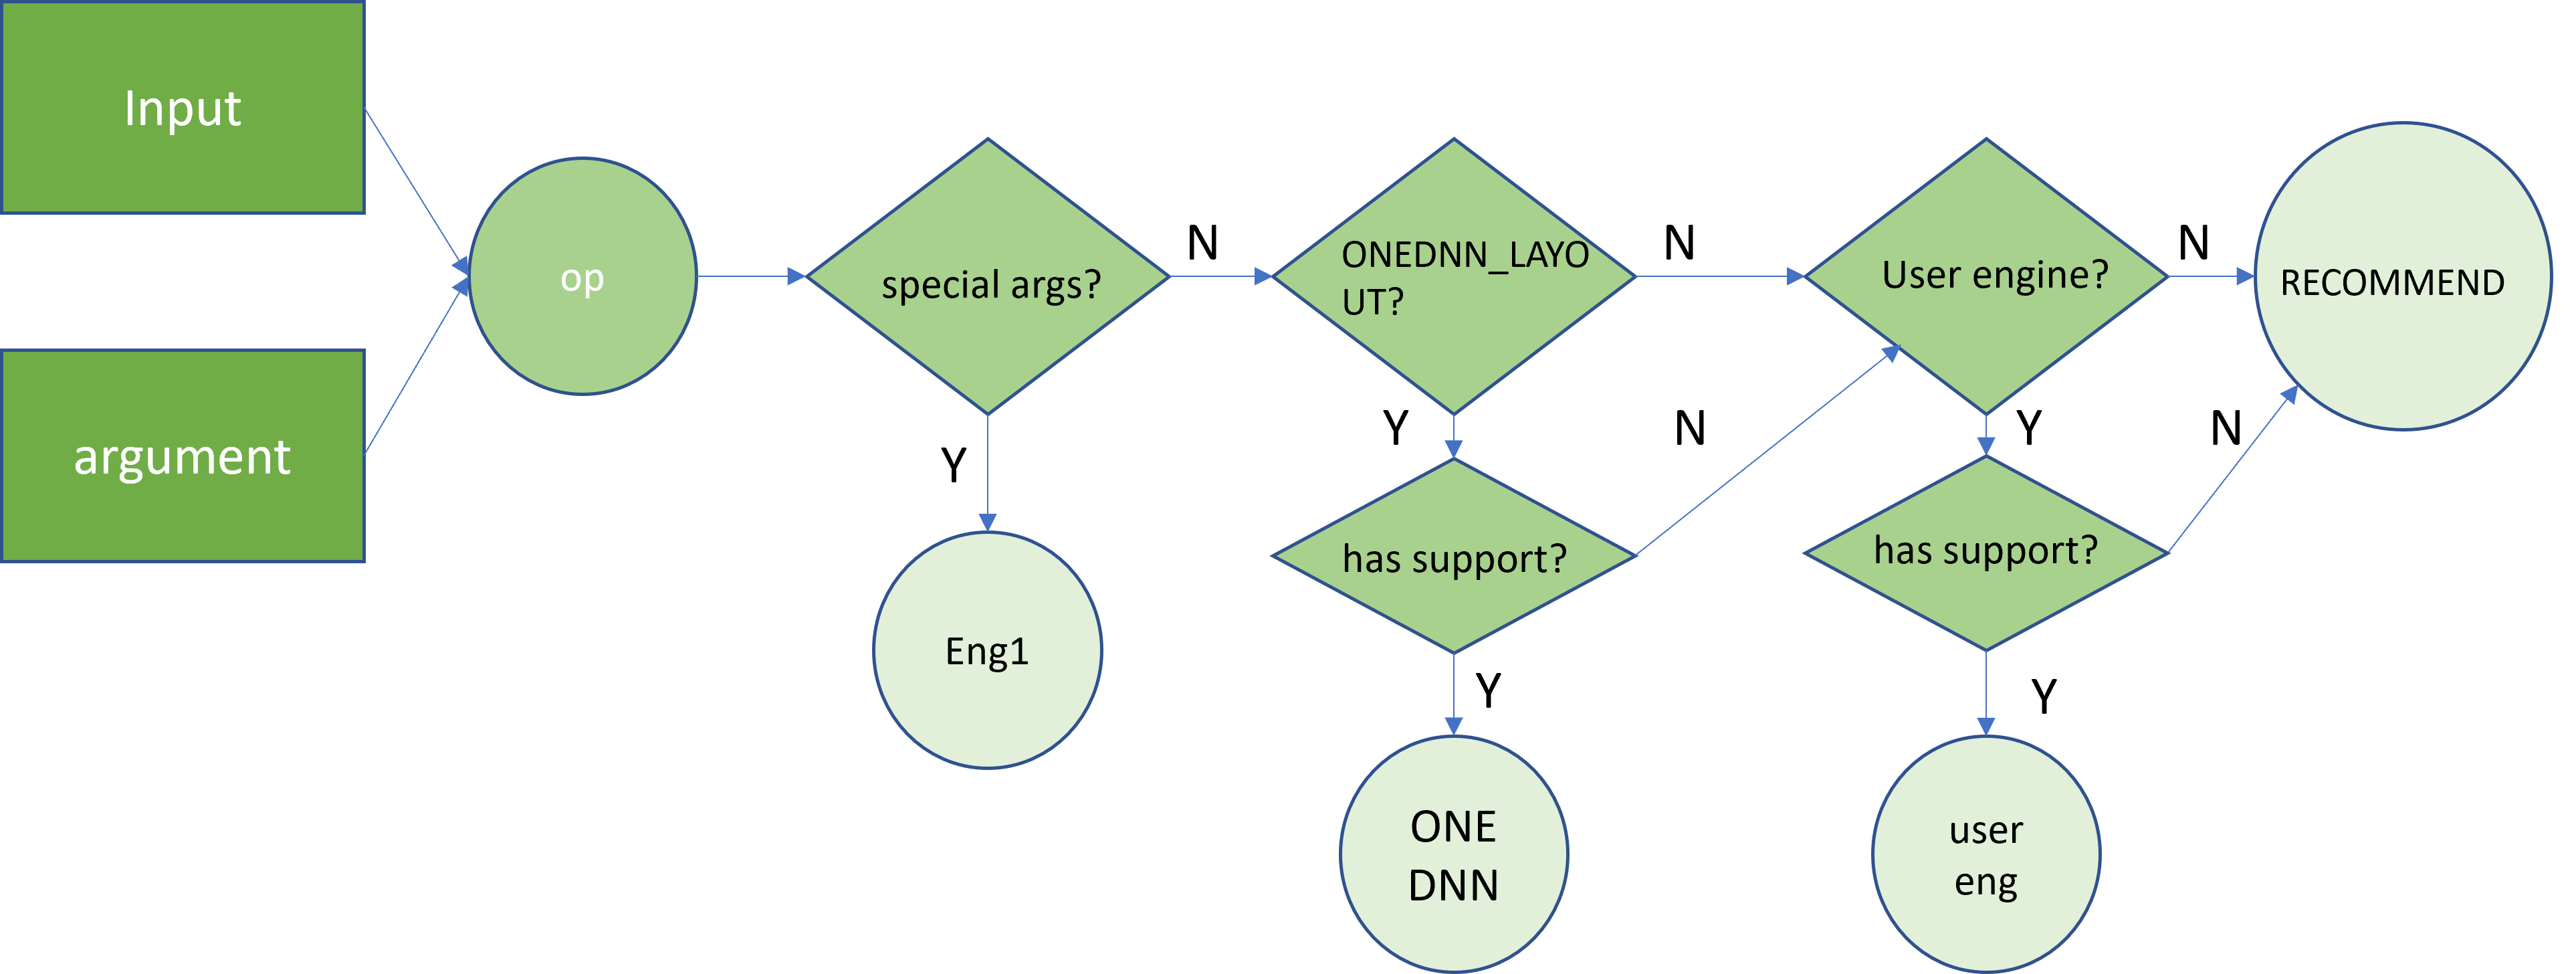 fig-2(1)-pt-conv-layout-path-dispatch